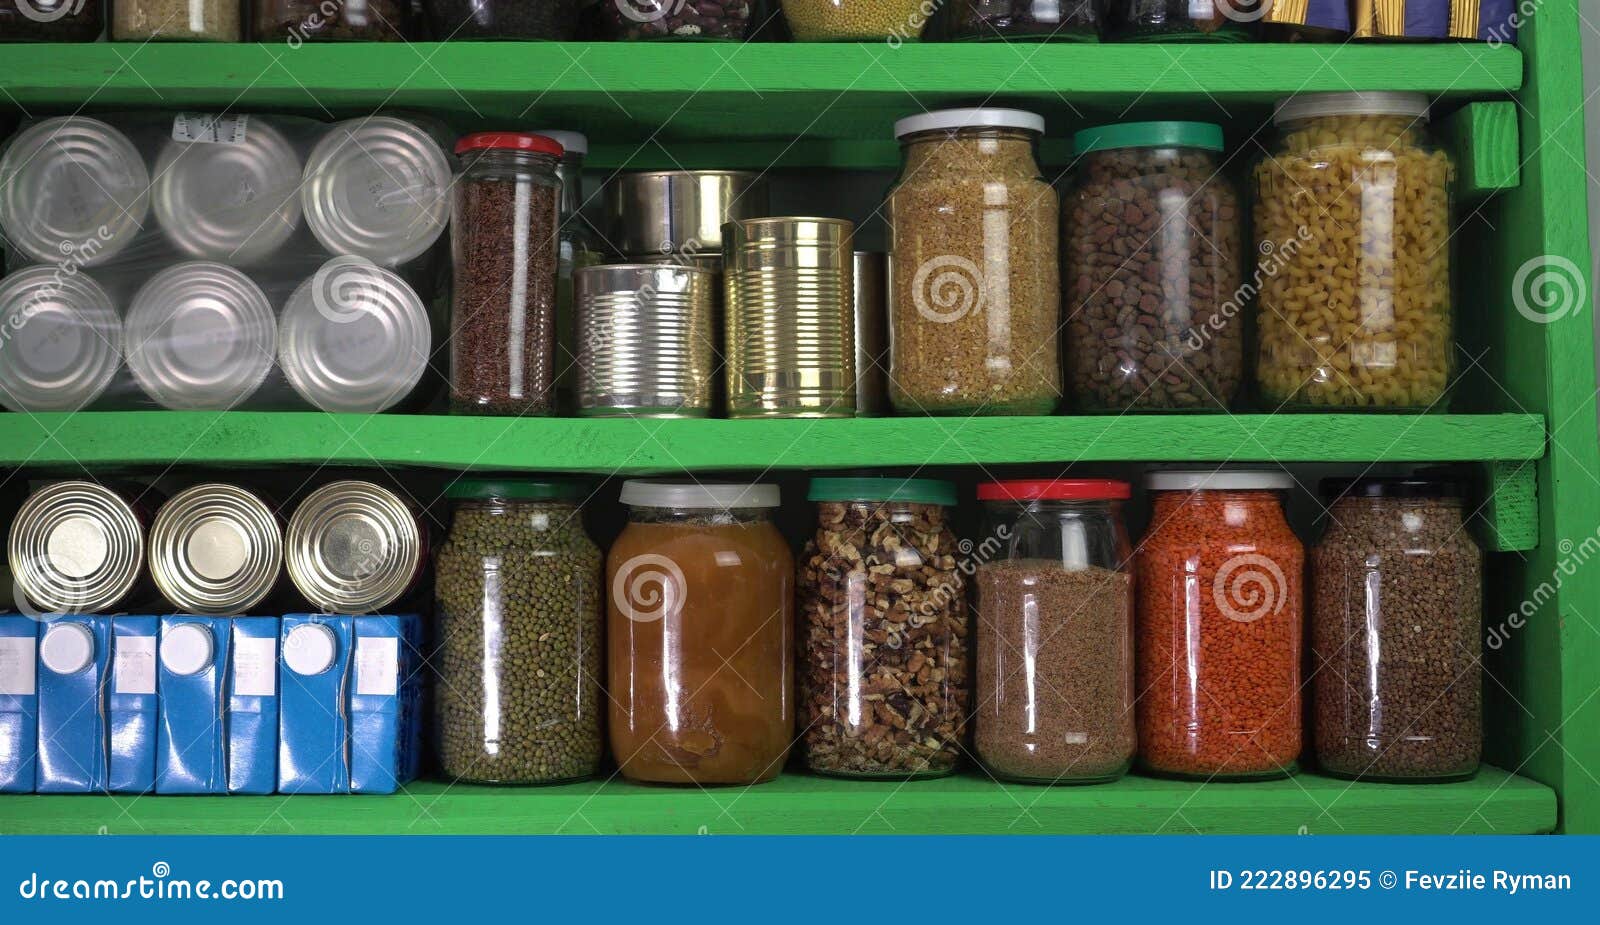 Zero Waste Kitchen: Glass jars in the pantry  Kitchen jars storage,  Kitchen jars, Eco kitchen